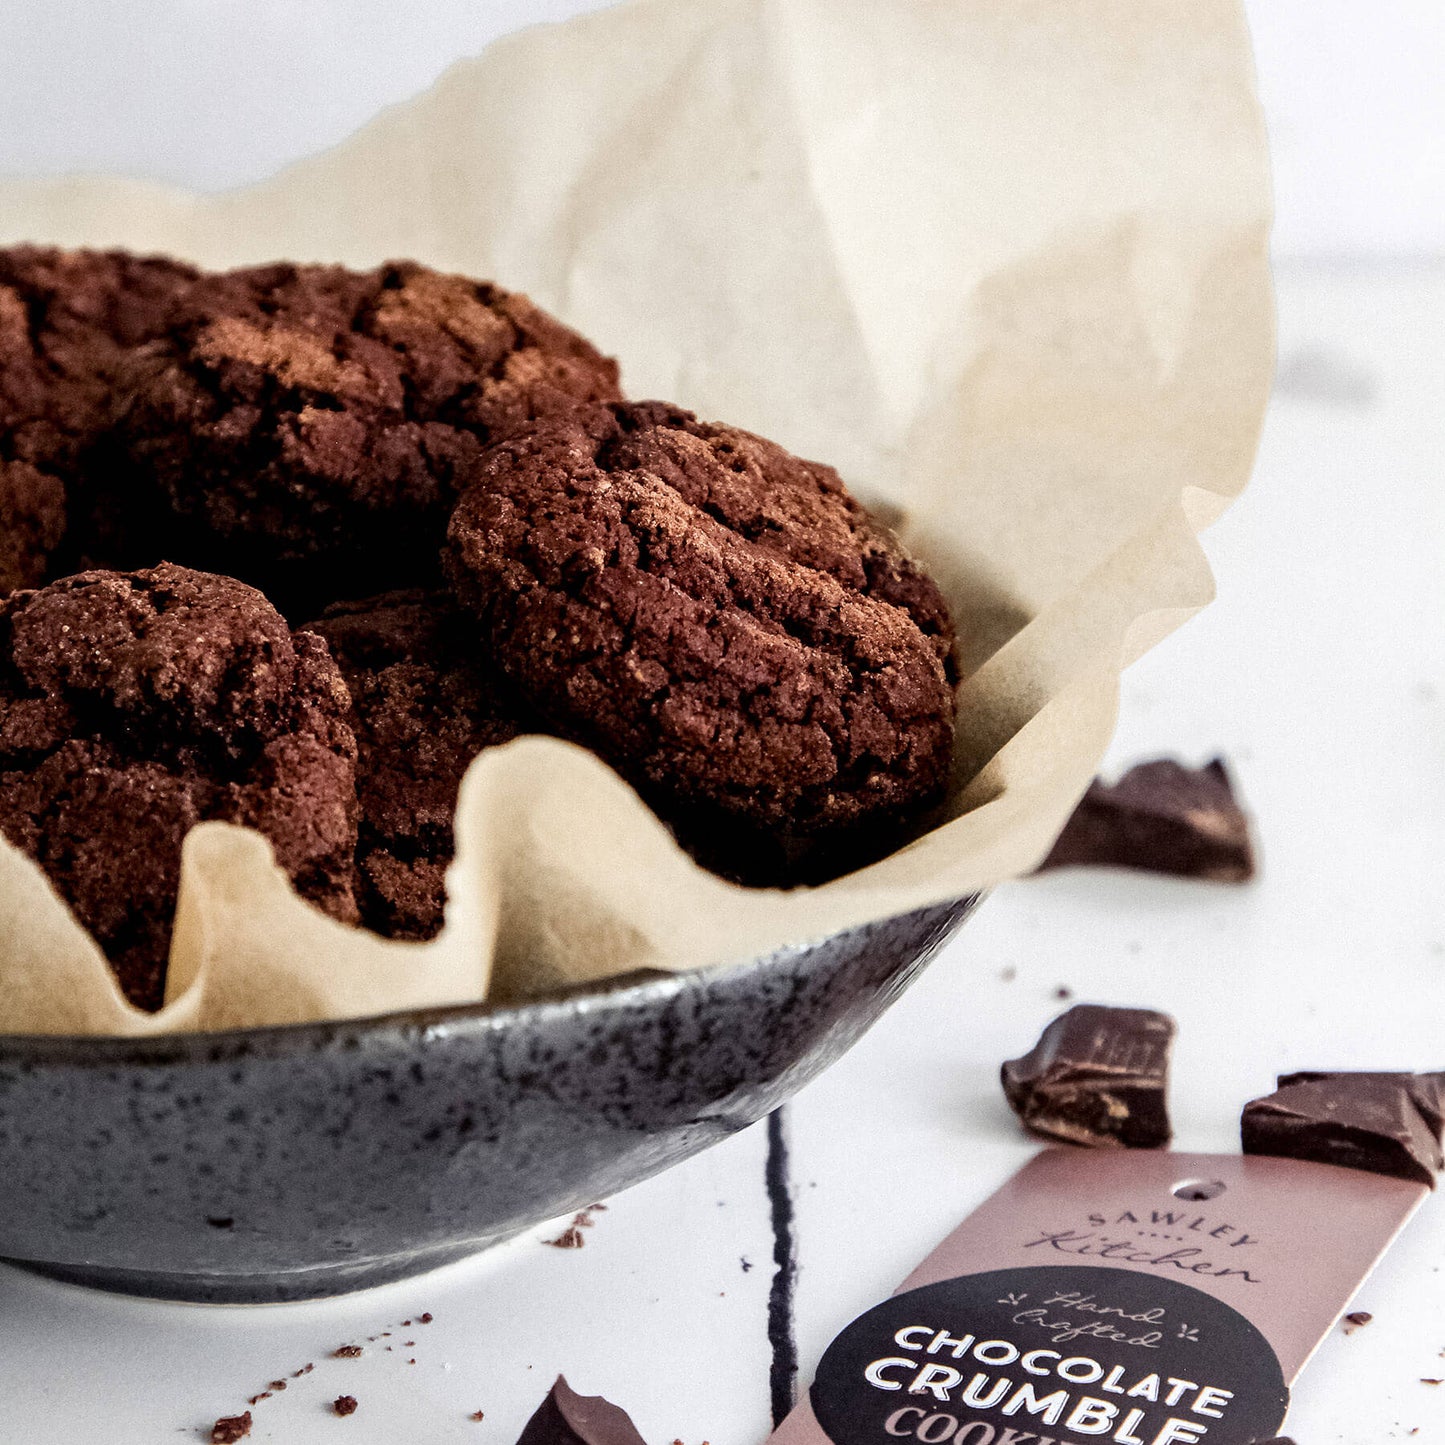 Chocolate Crumble Cookies